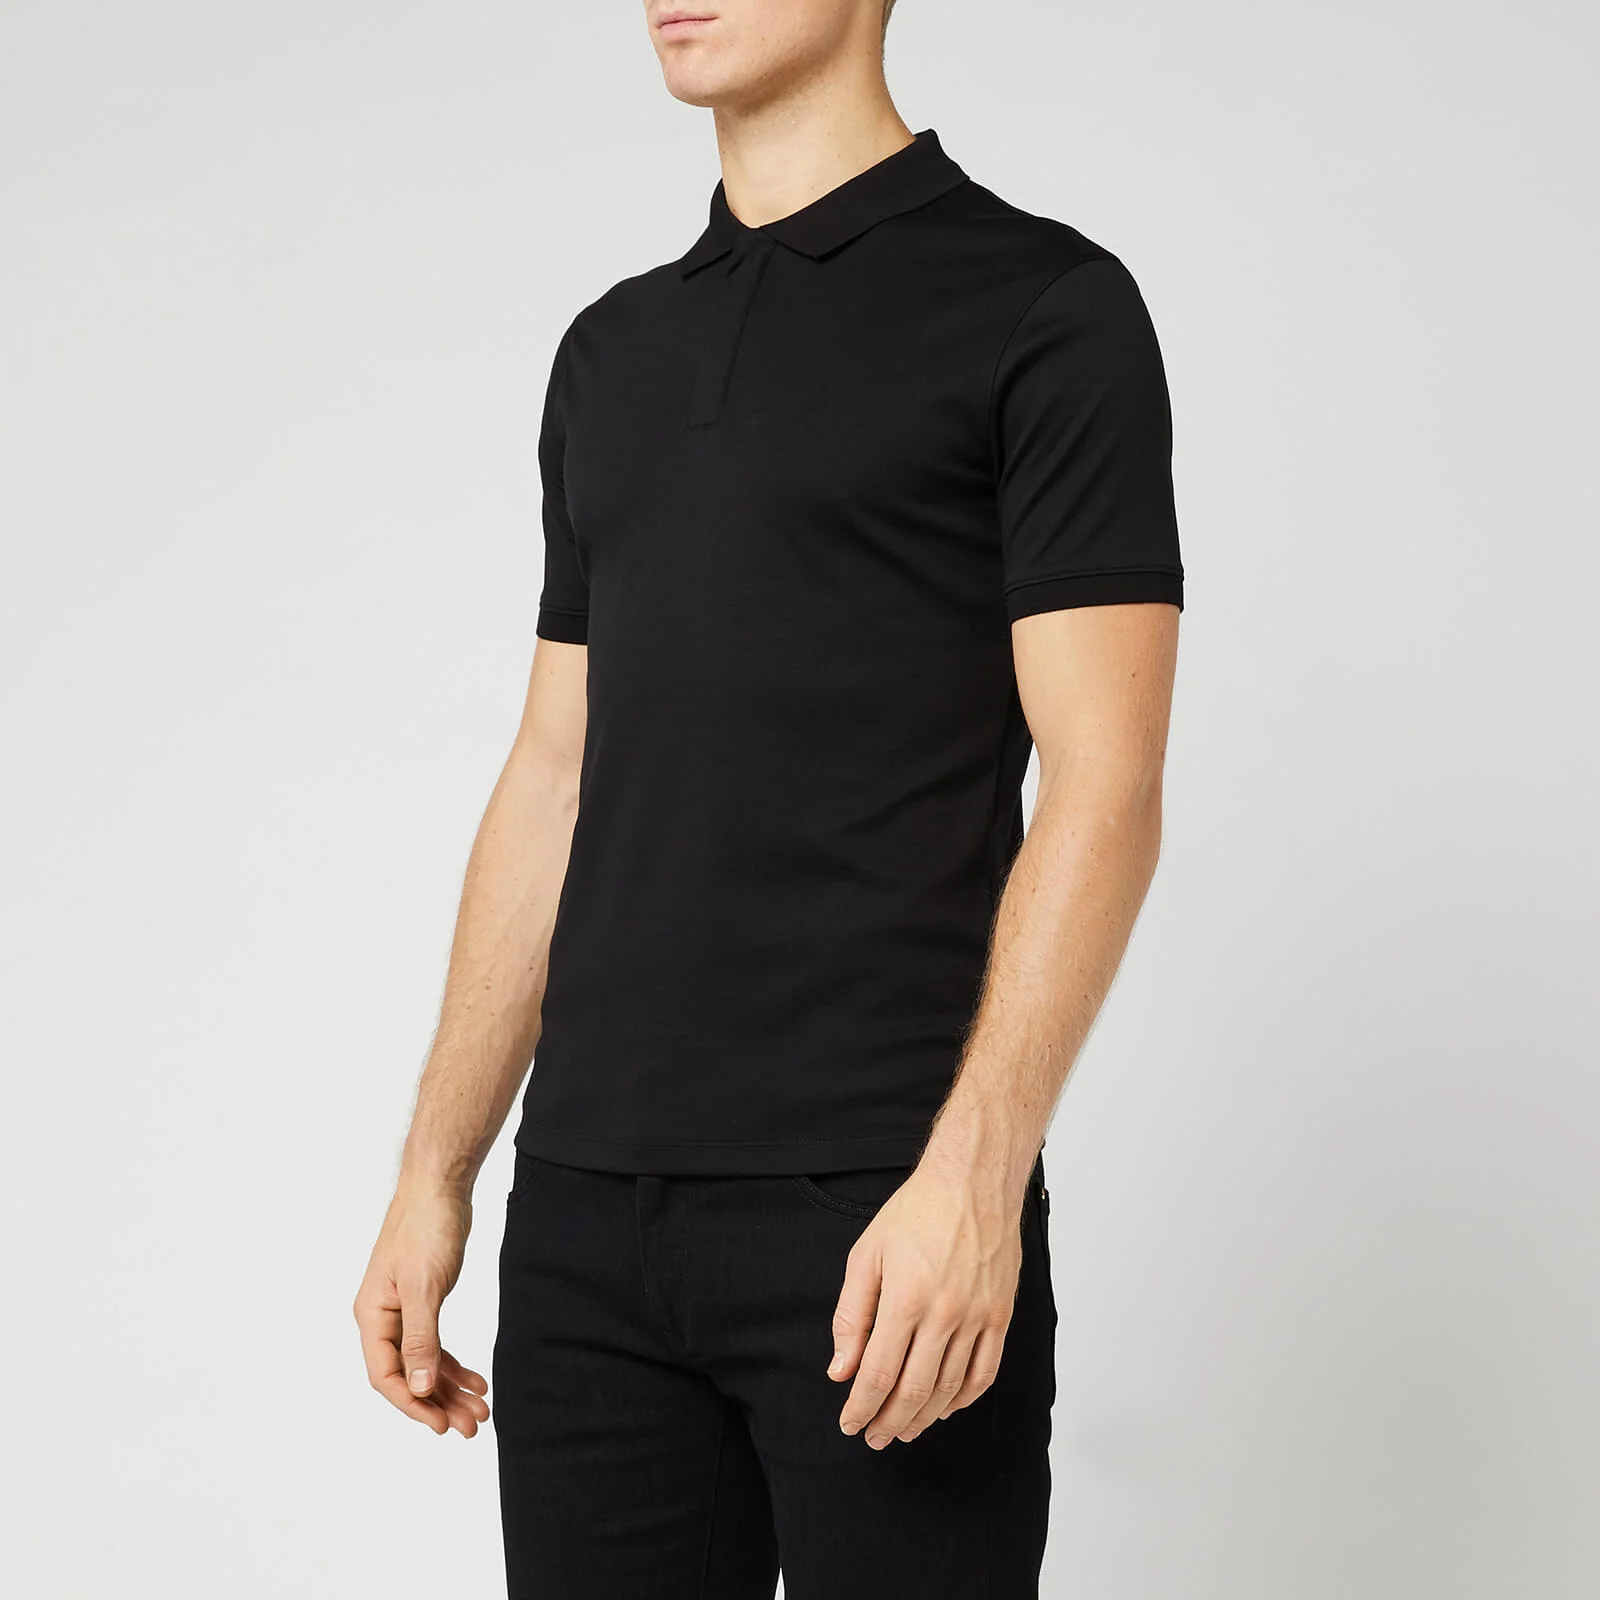 Emporio Armani Men's Mercerized Polo Shirt - Black Image 1